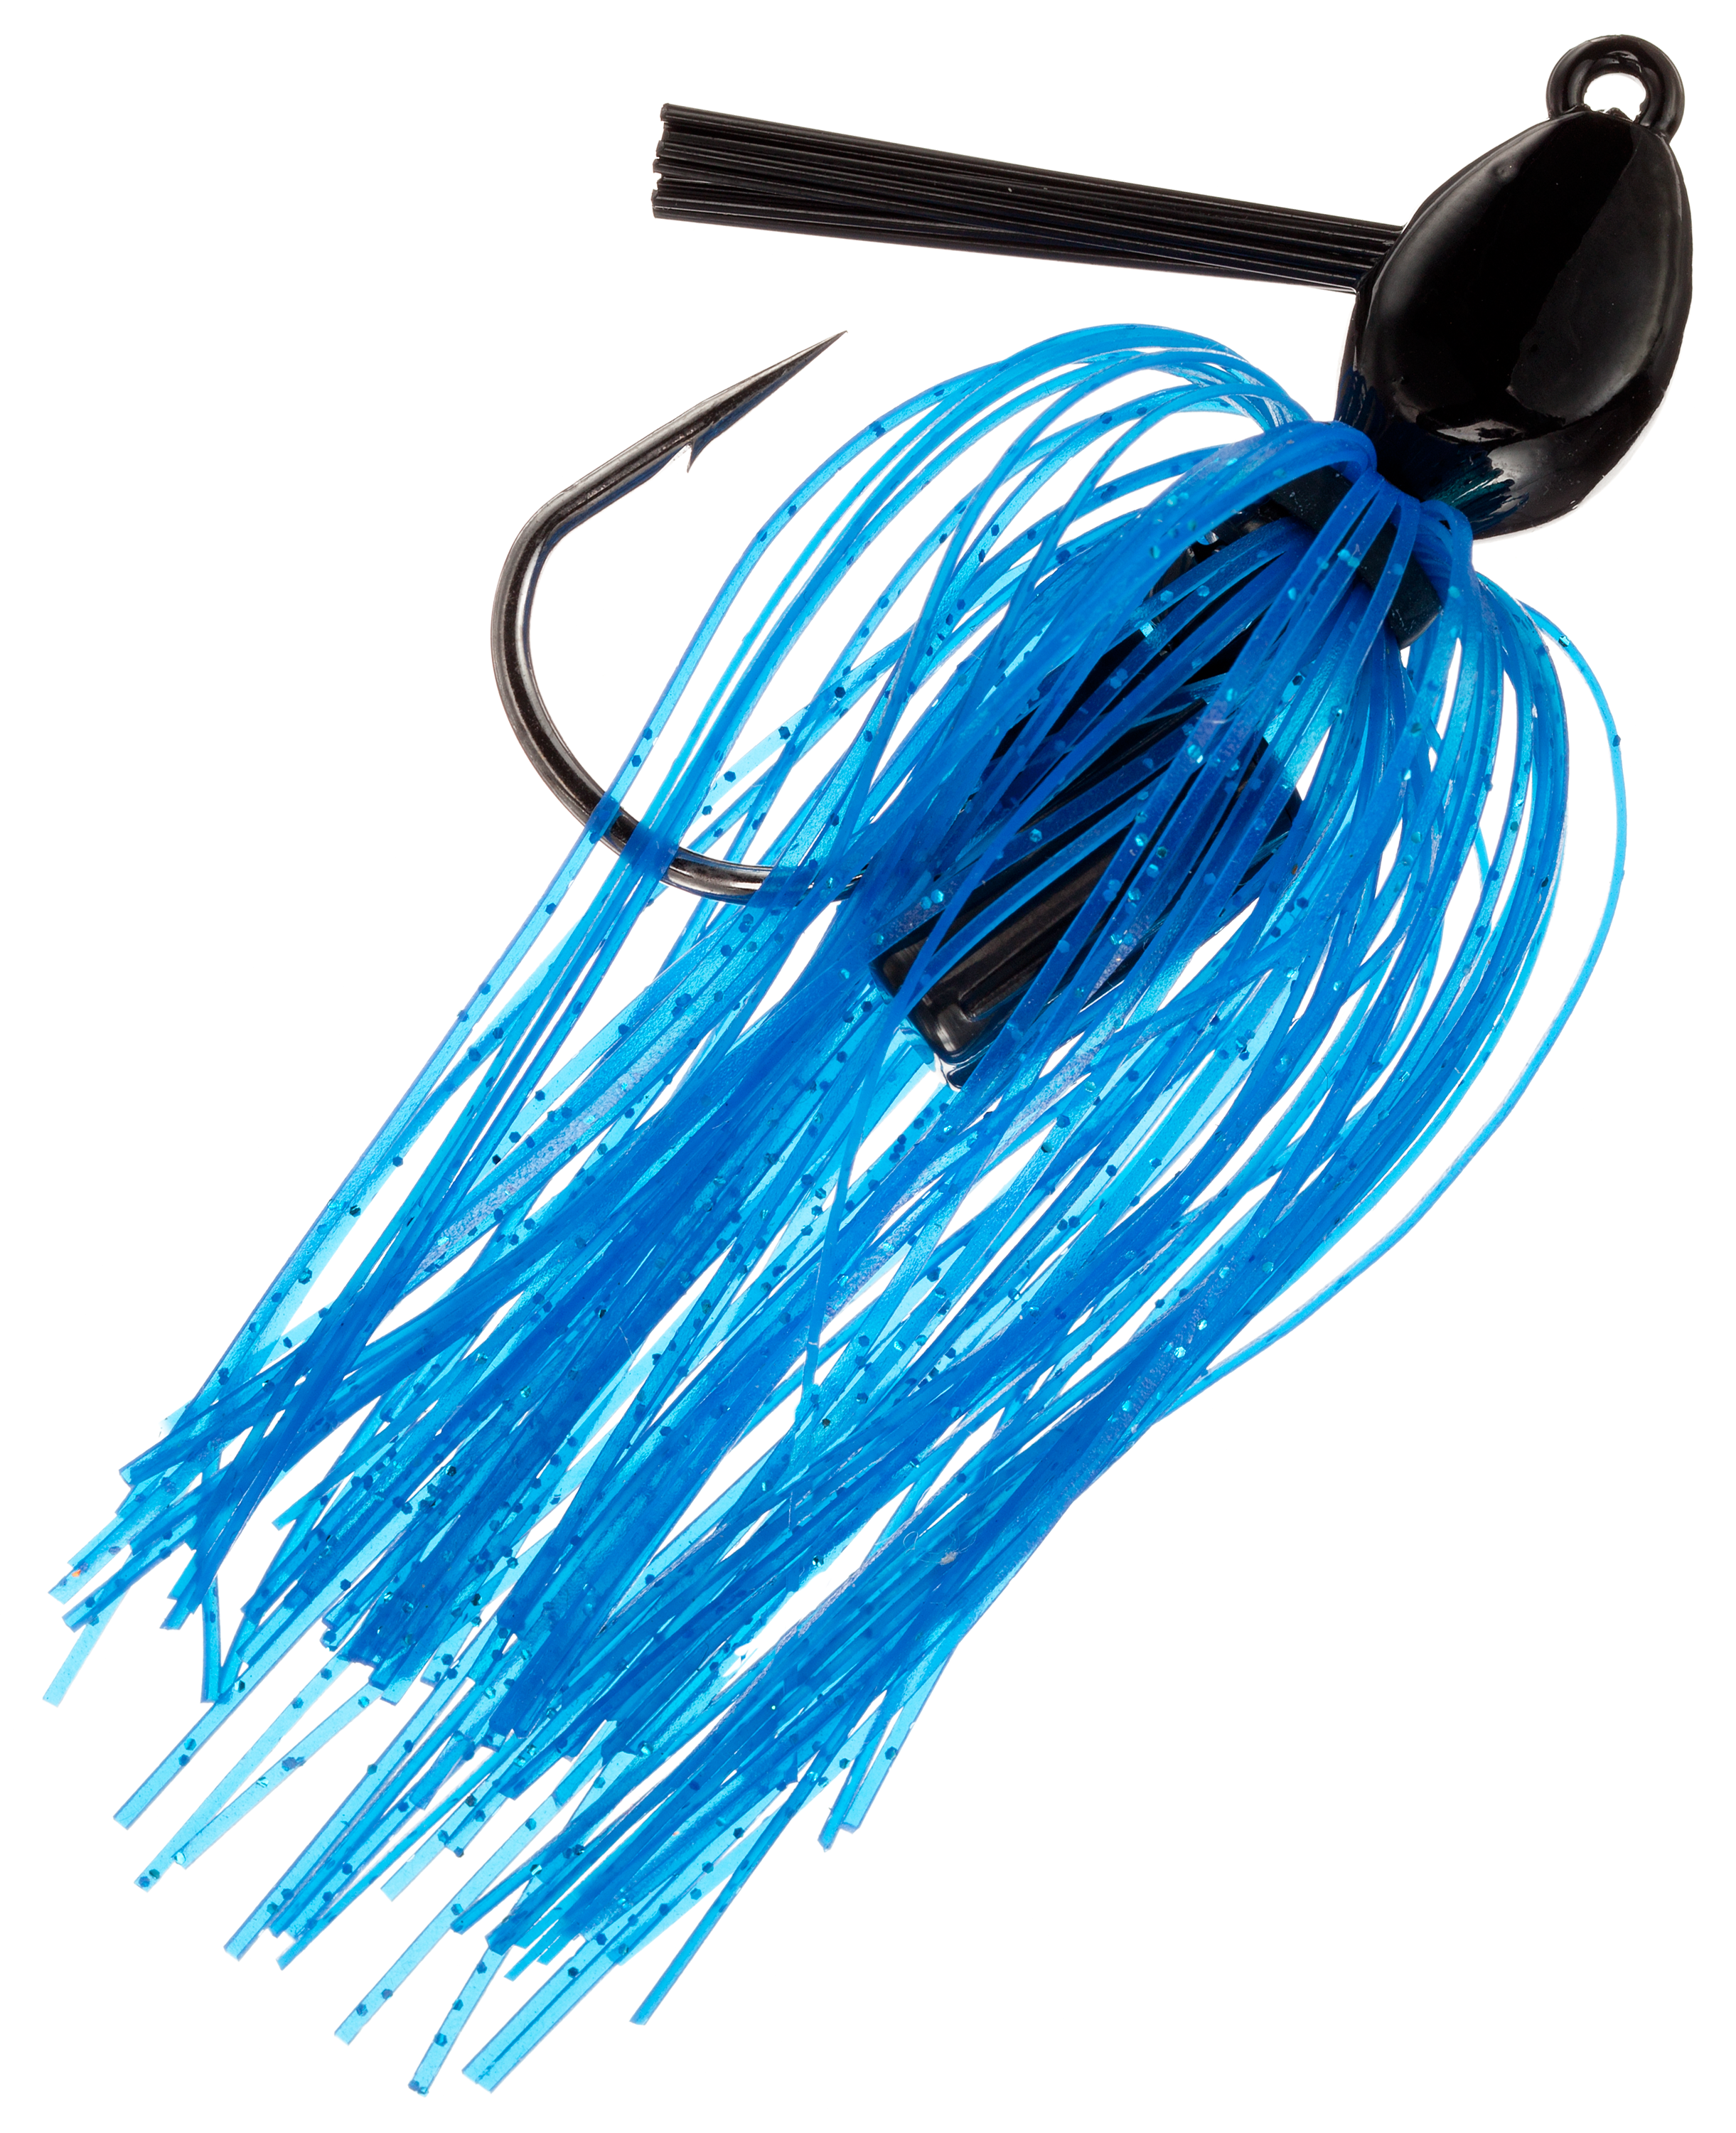 Bass Pro Shops Enticer Pro Series Rattling Jig - 3/8 oz - Electric Blue